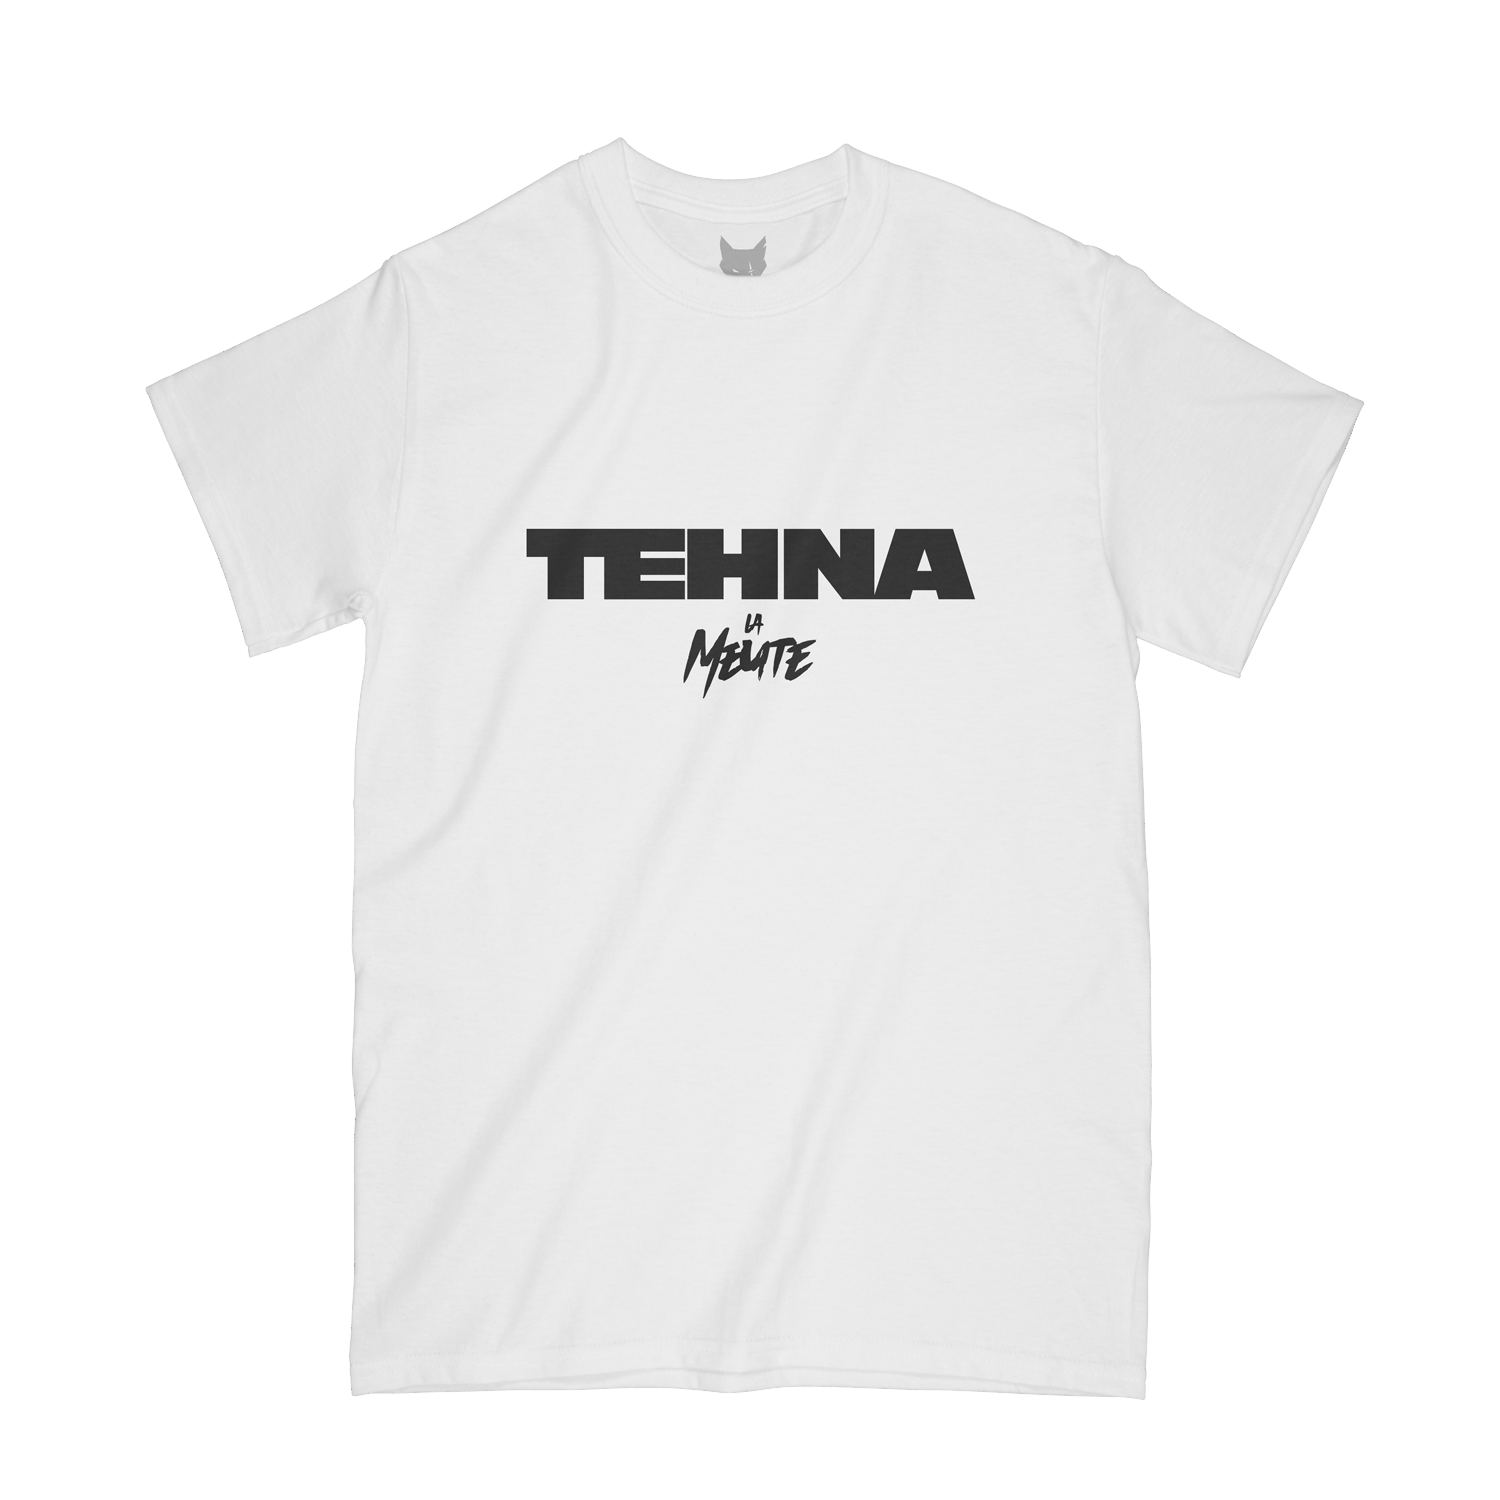 LA MEUTE - T-shirt Thena